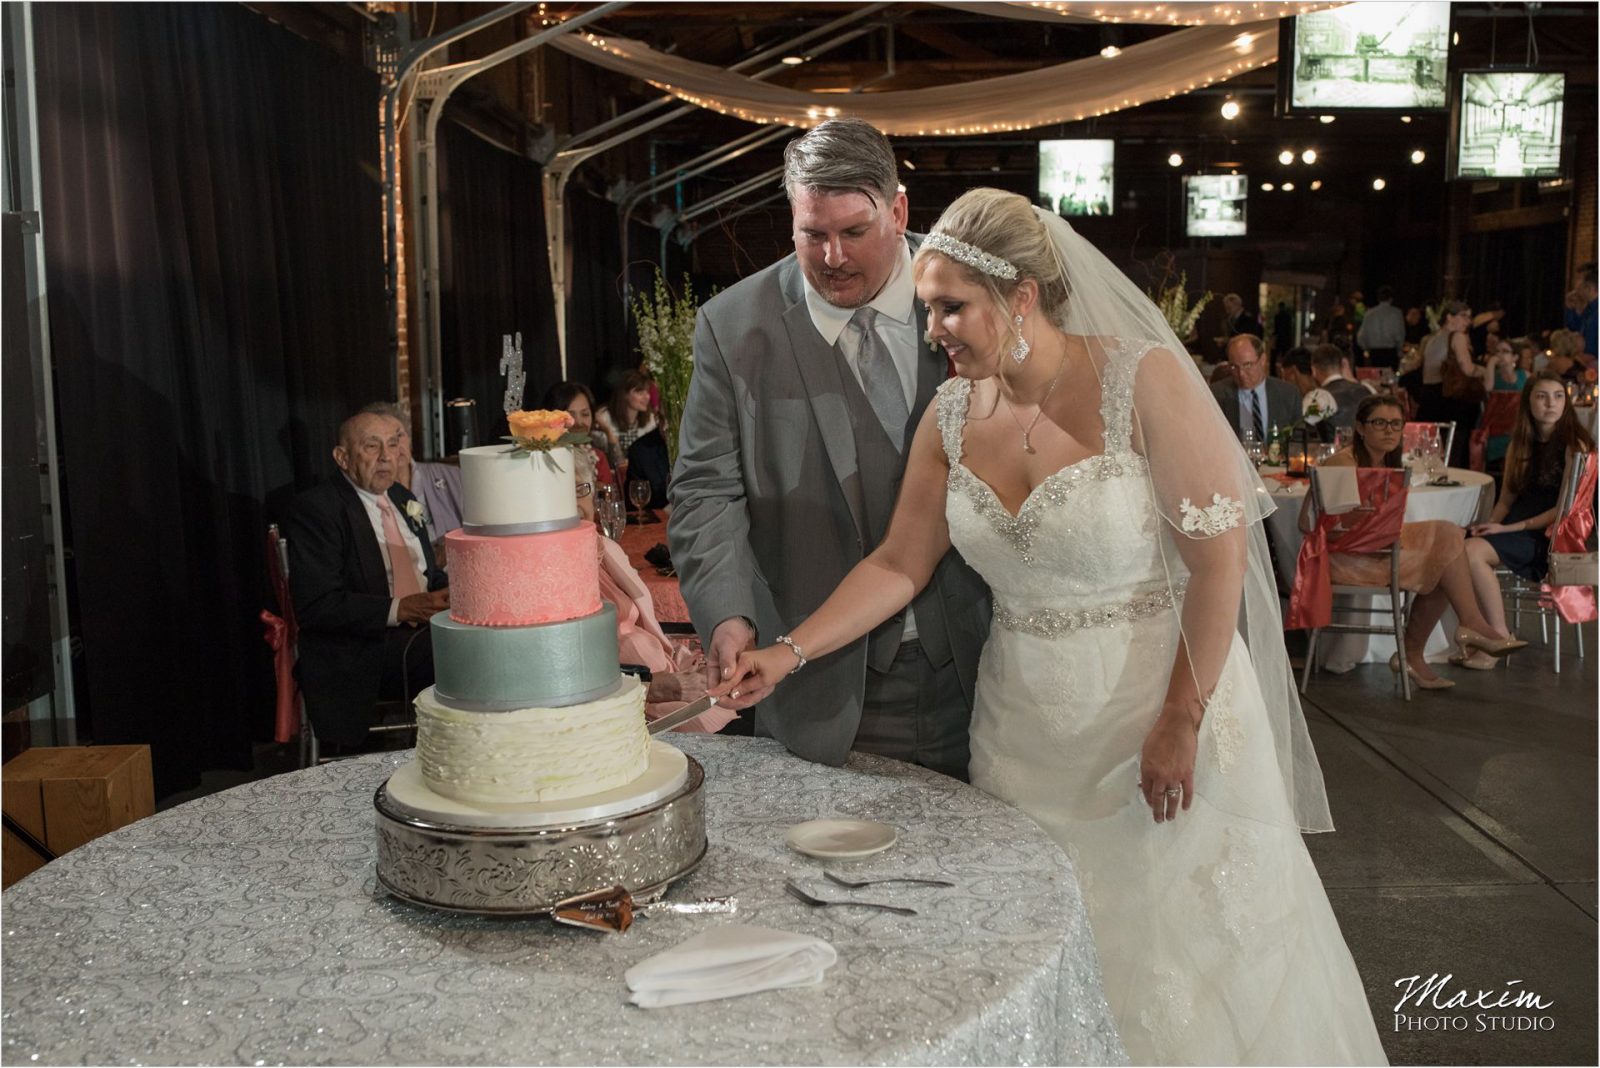 Top of the Market Dayton Ohio Wedding Reception cake